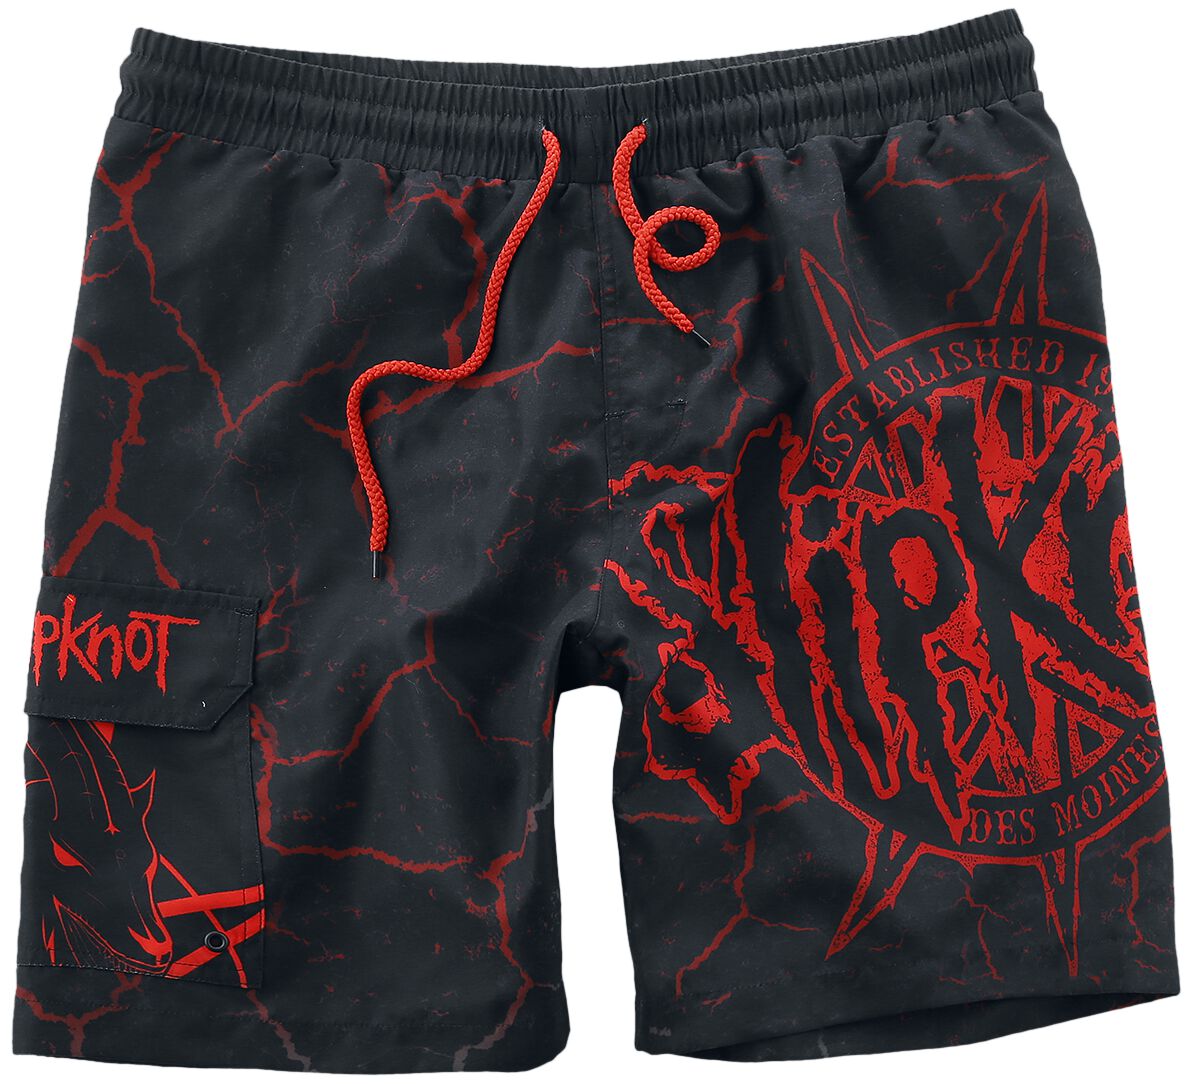 Slipknot EMP Signature Collection Badeshort schwarz rot in XL